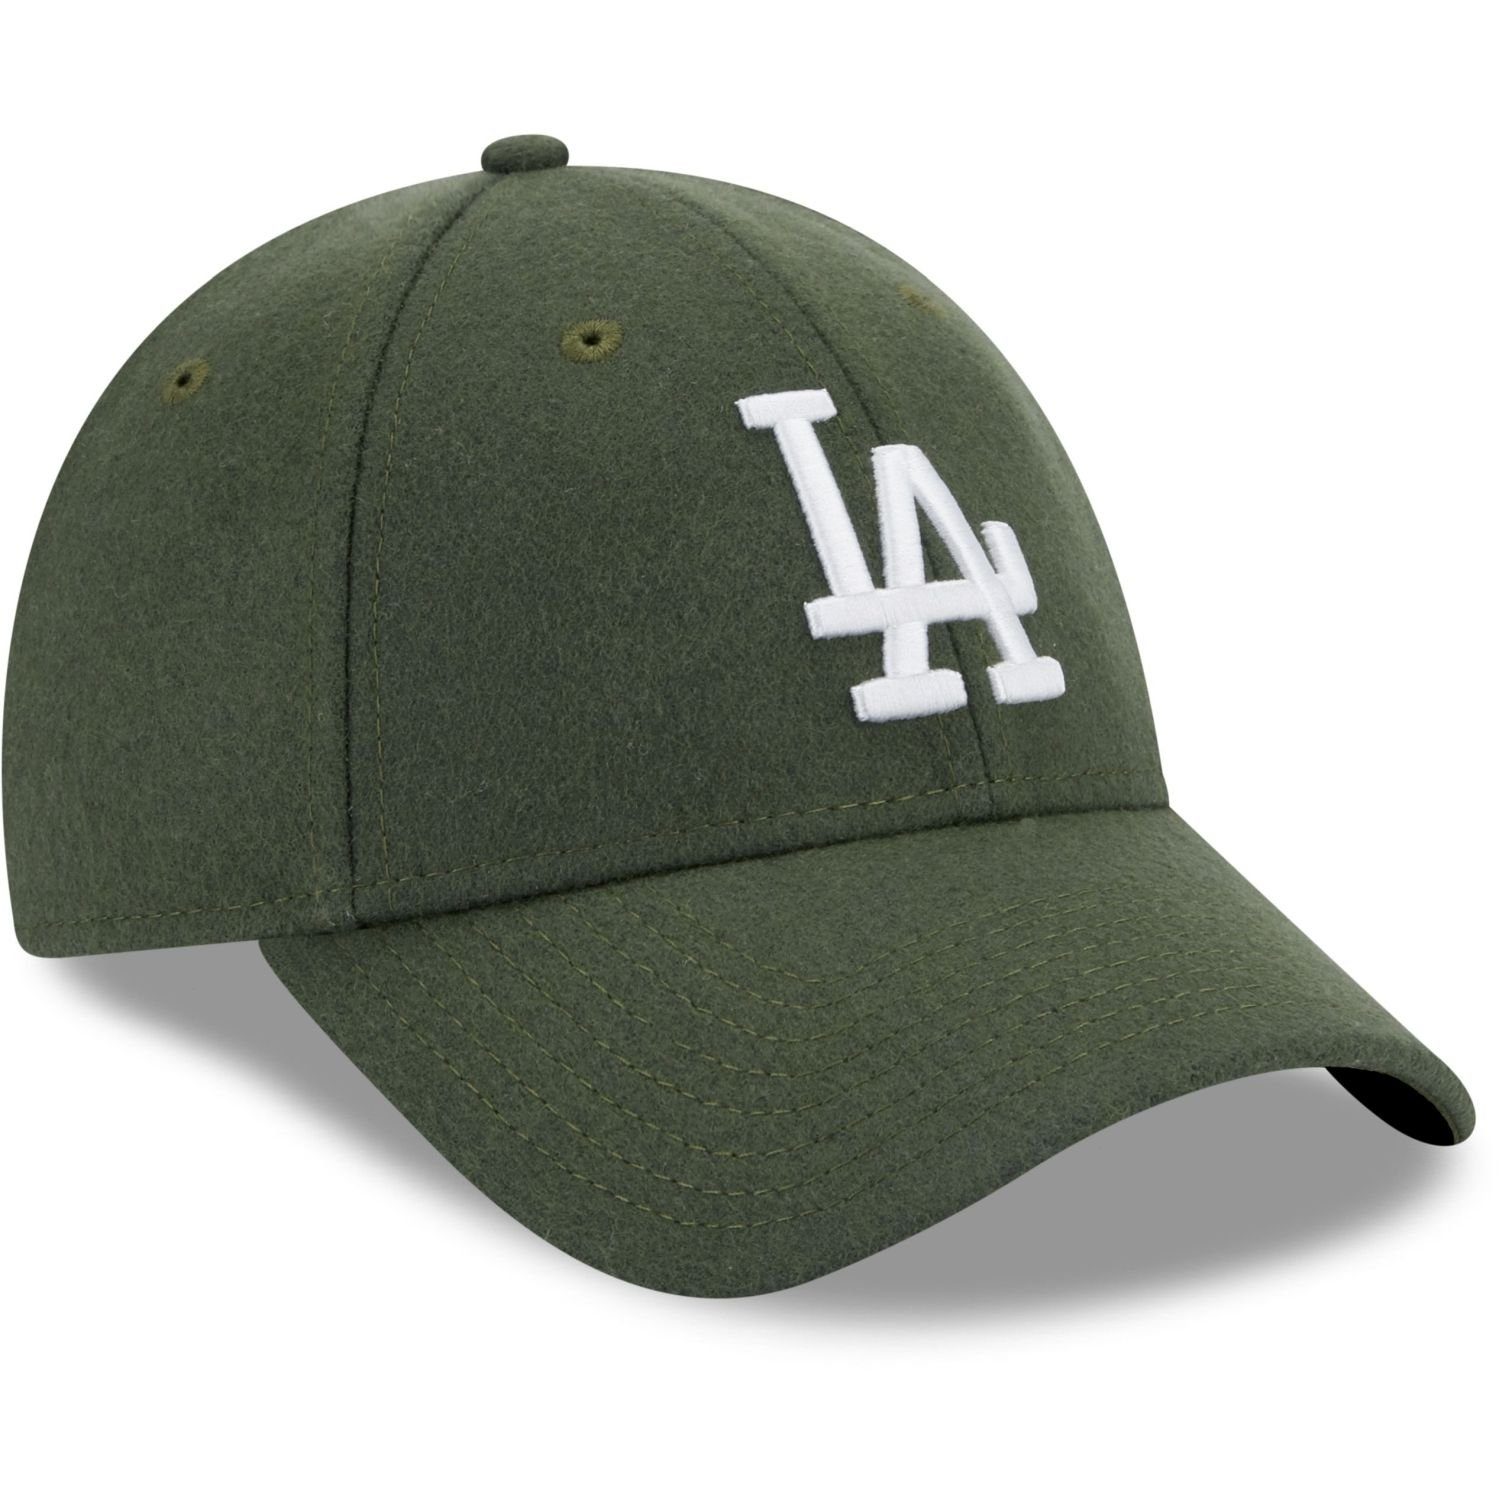 Los Baseball WOOL Dodgers 9Forty Angeles Cap New green oliv-meliert Era